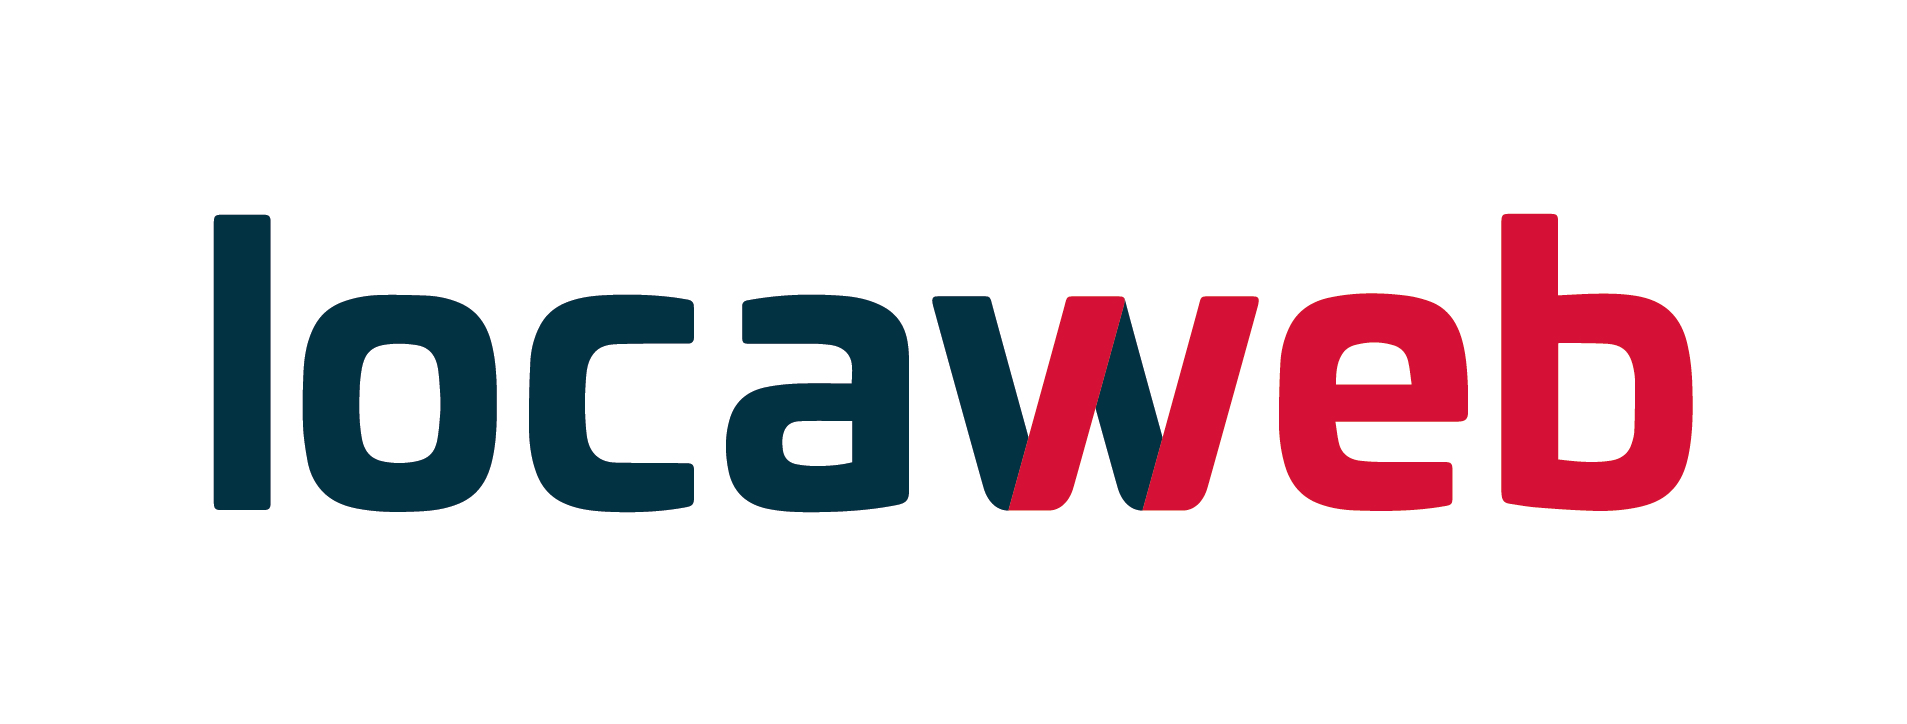 Locaweb Logo - Locaweb altera identidade visual para marcar novo momento